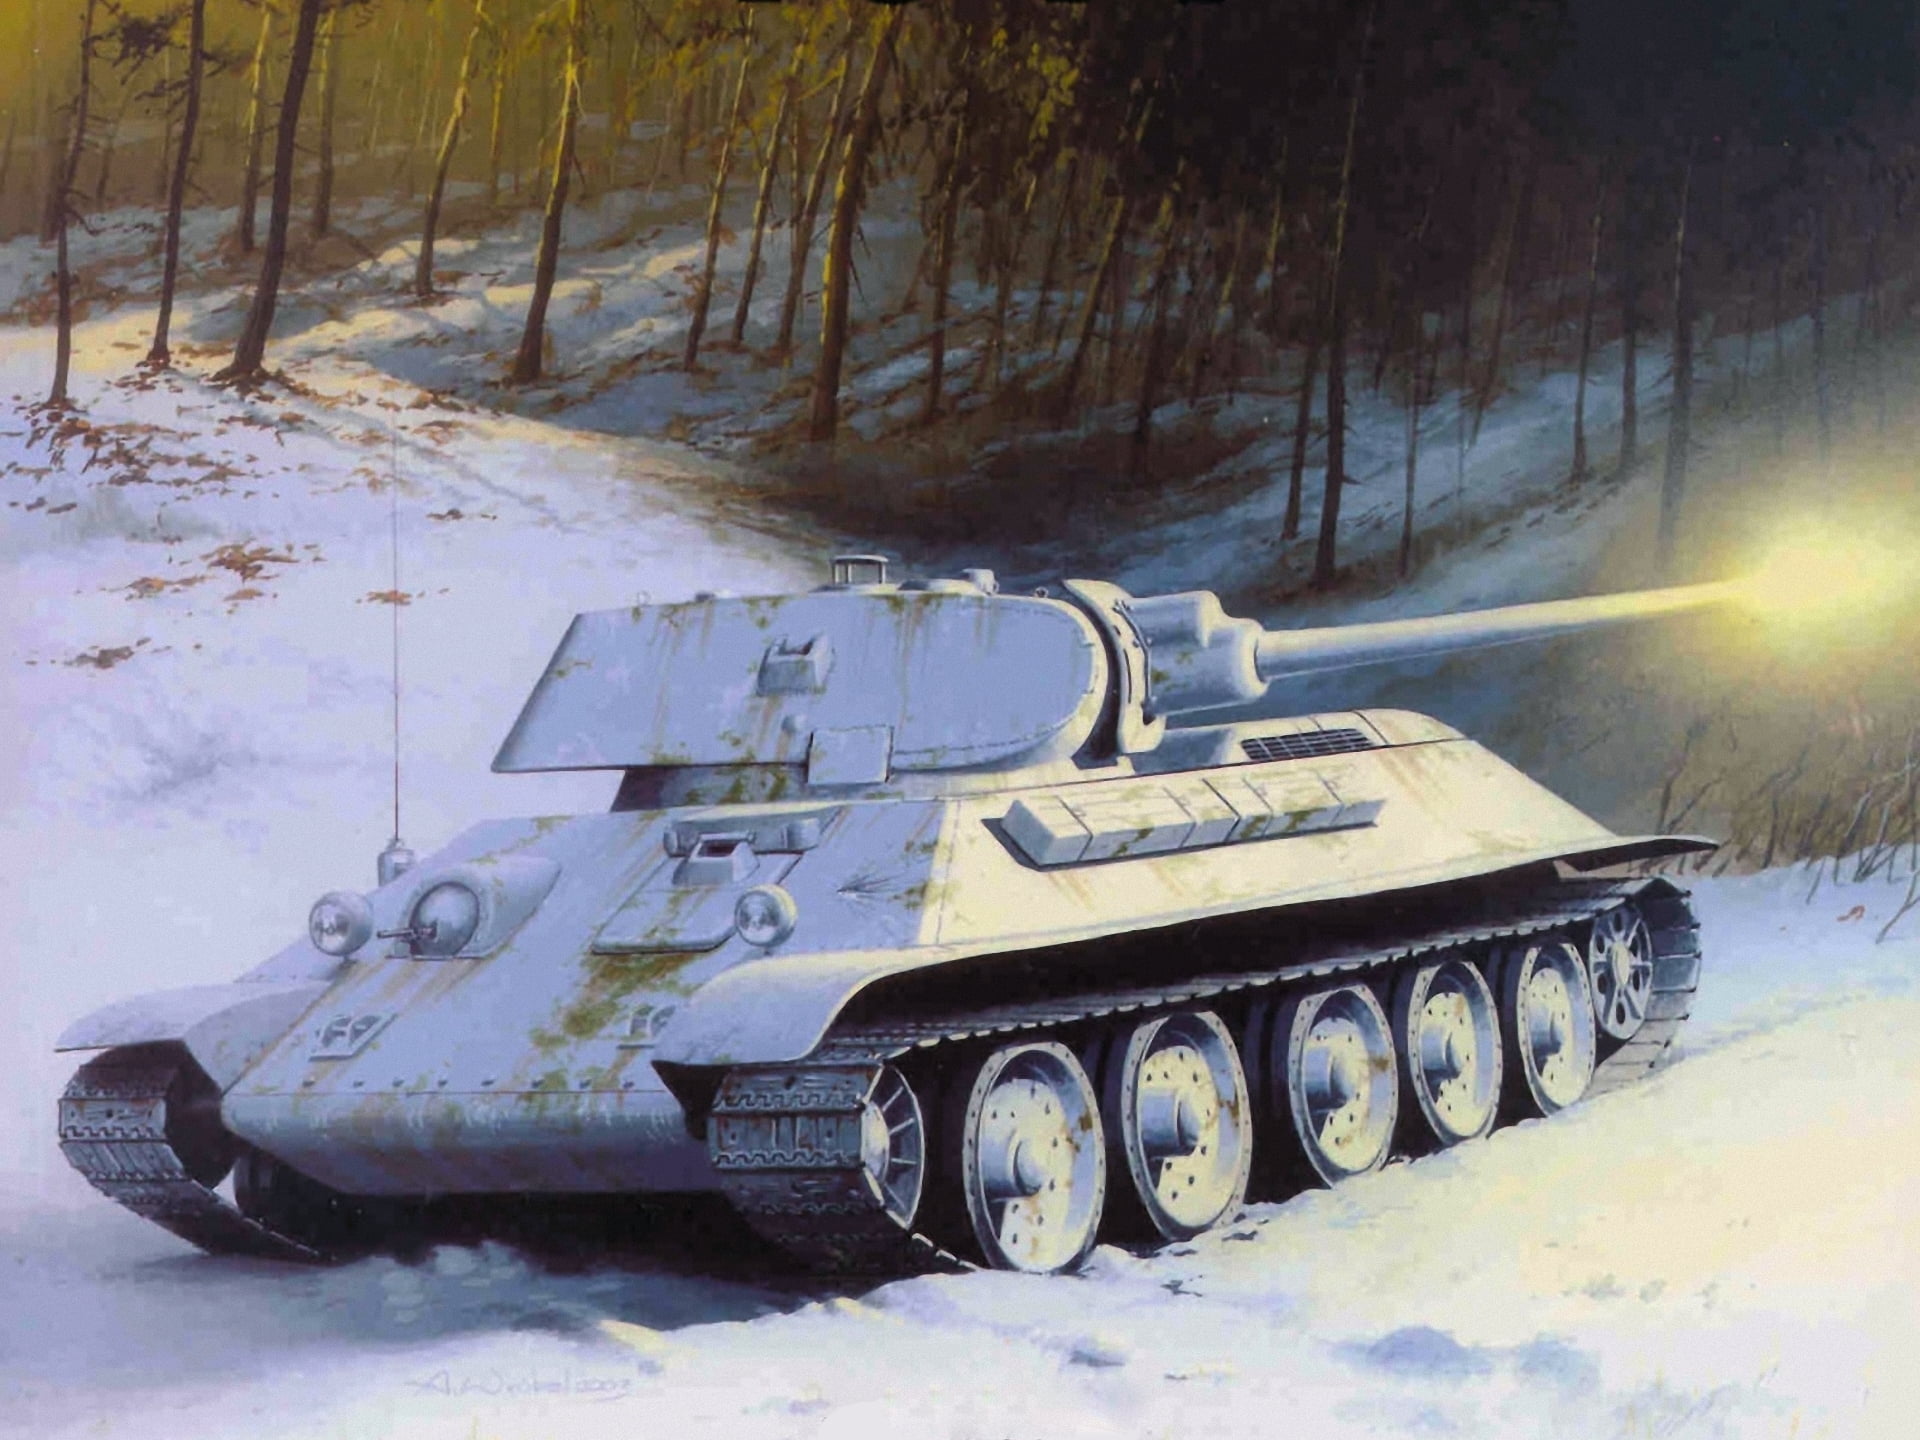 gray and black war tank, winter, white, snow, trees, flash, shot